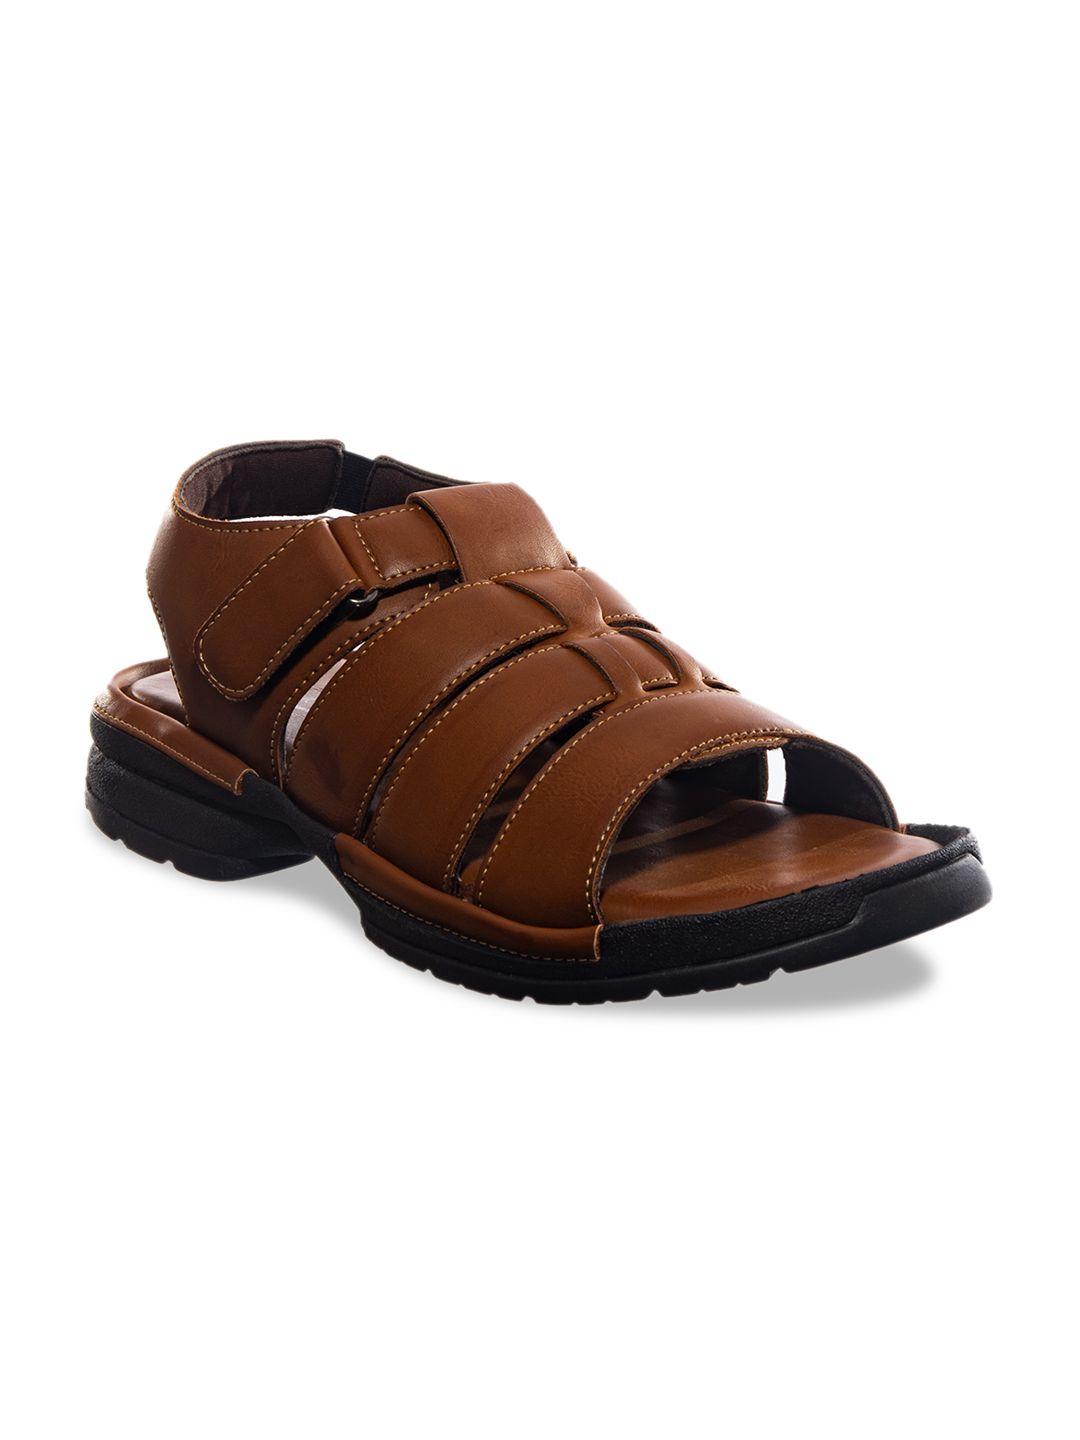 khadims men brown comfort sandals